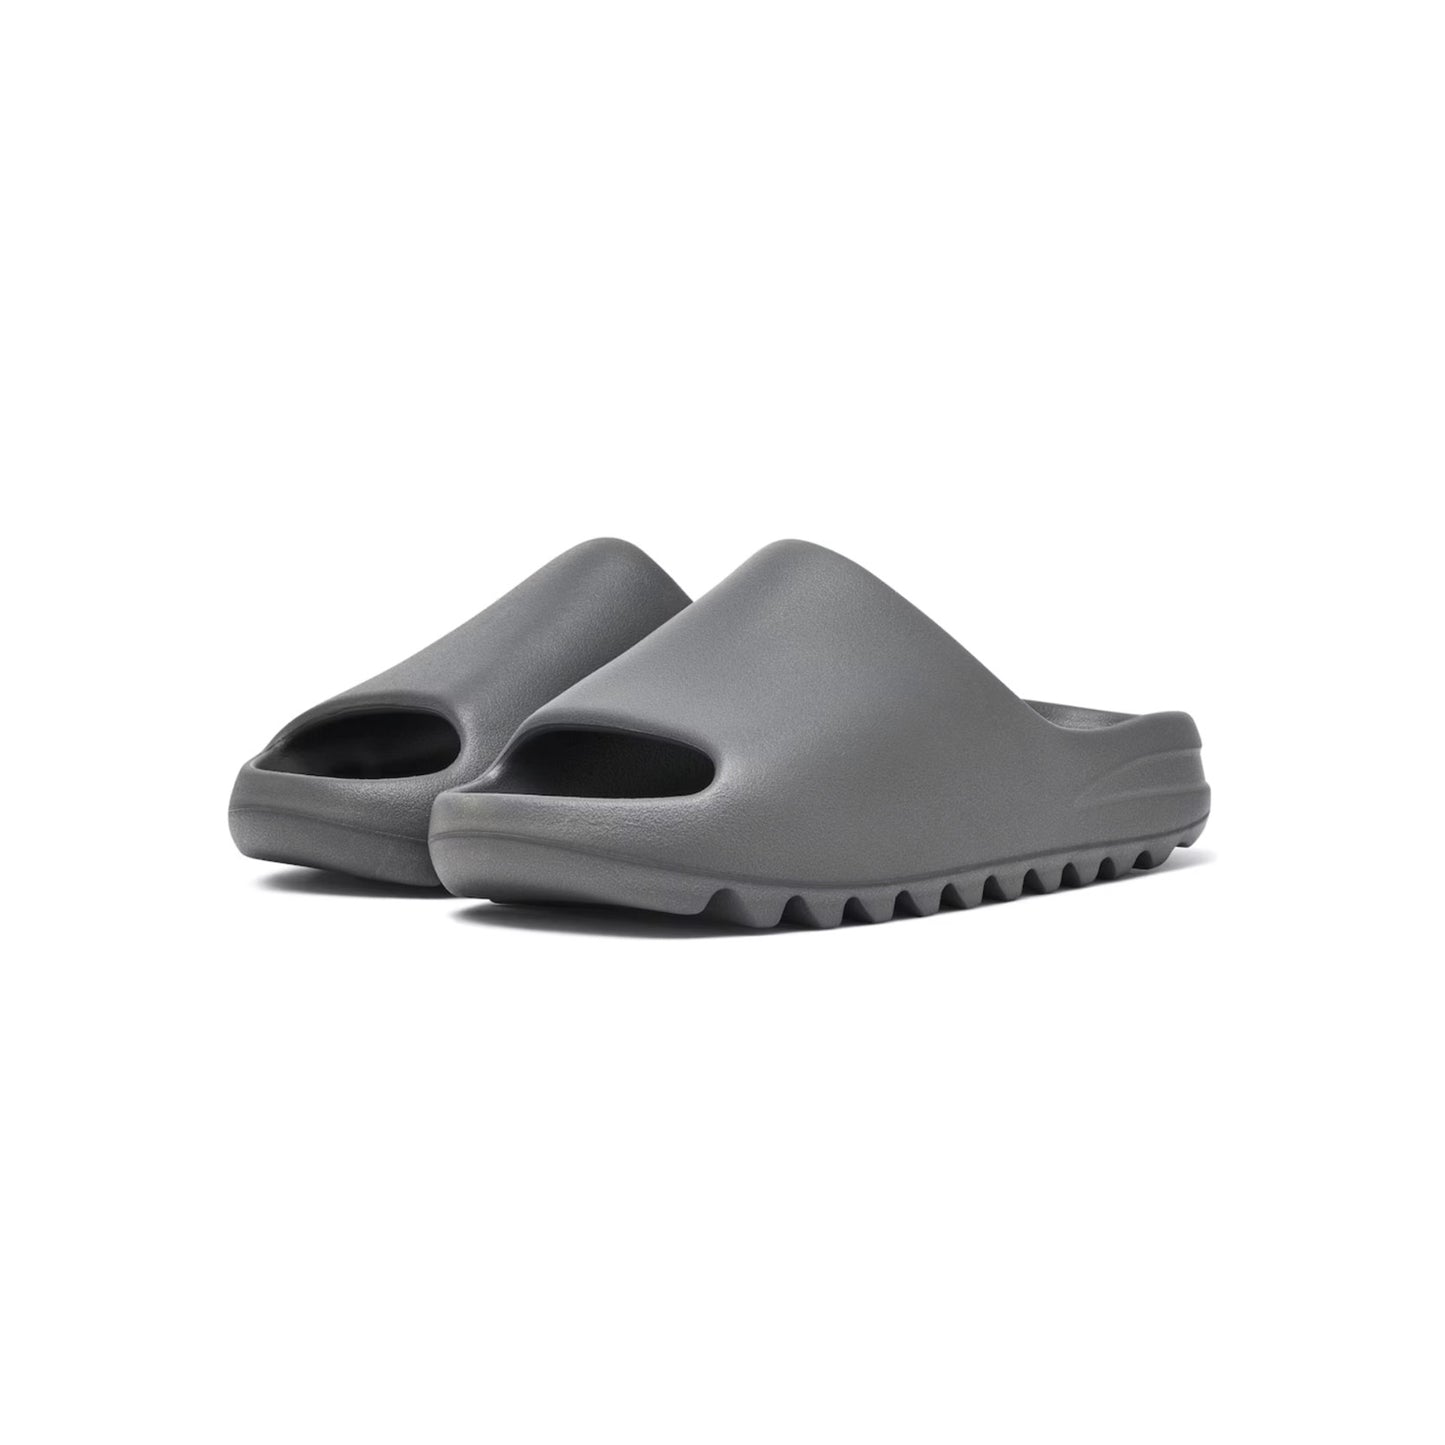 Adidas Yeezy Slide Granite